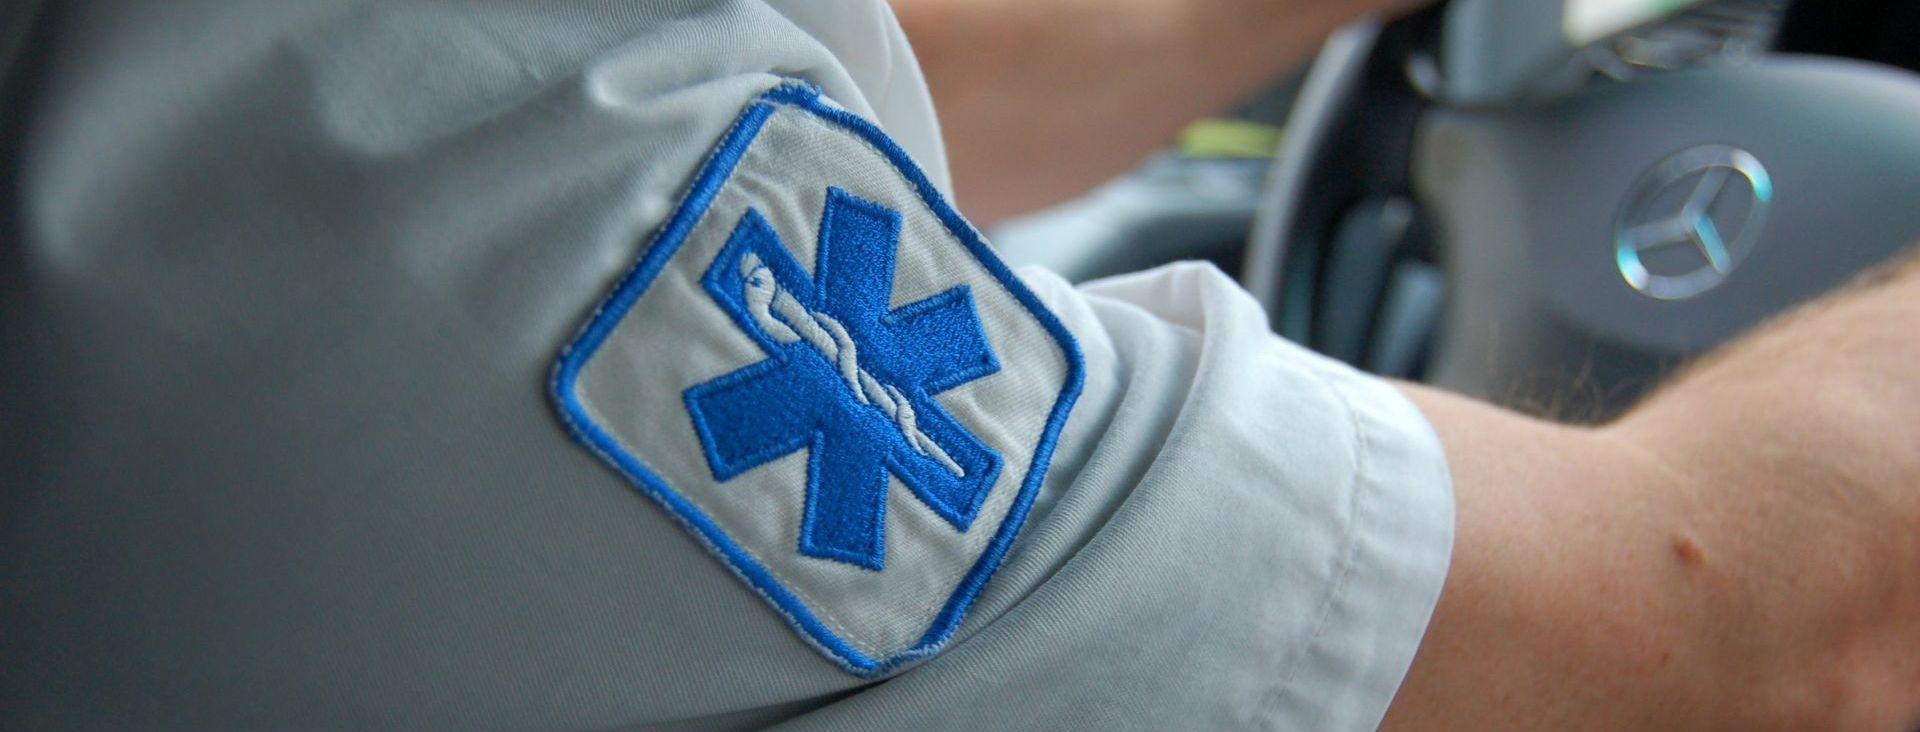 L'uniforme blanc et bleu d'un ambulancier